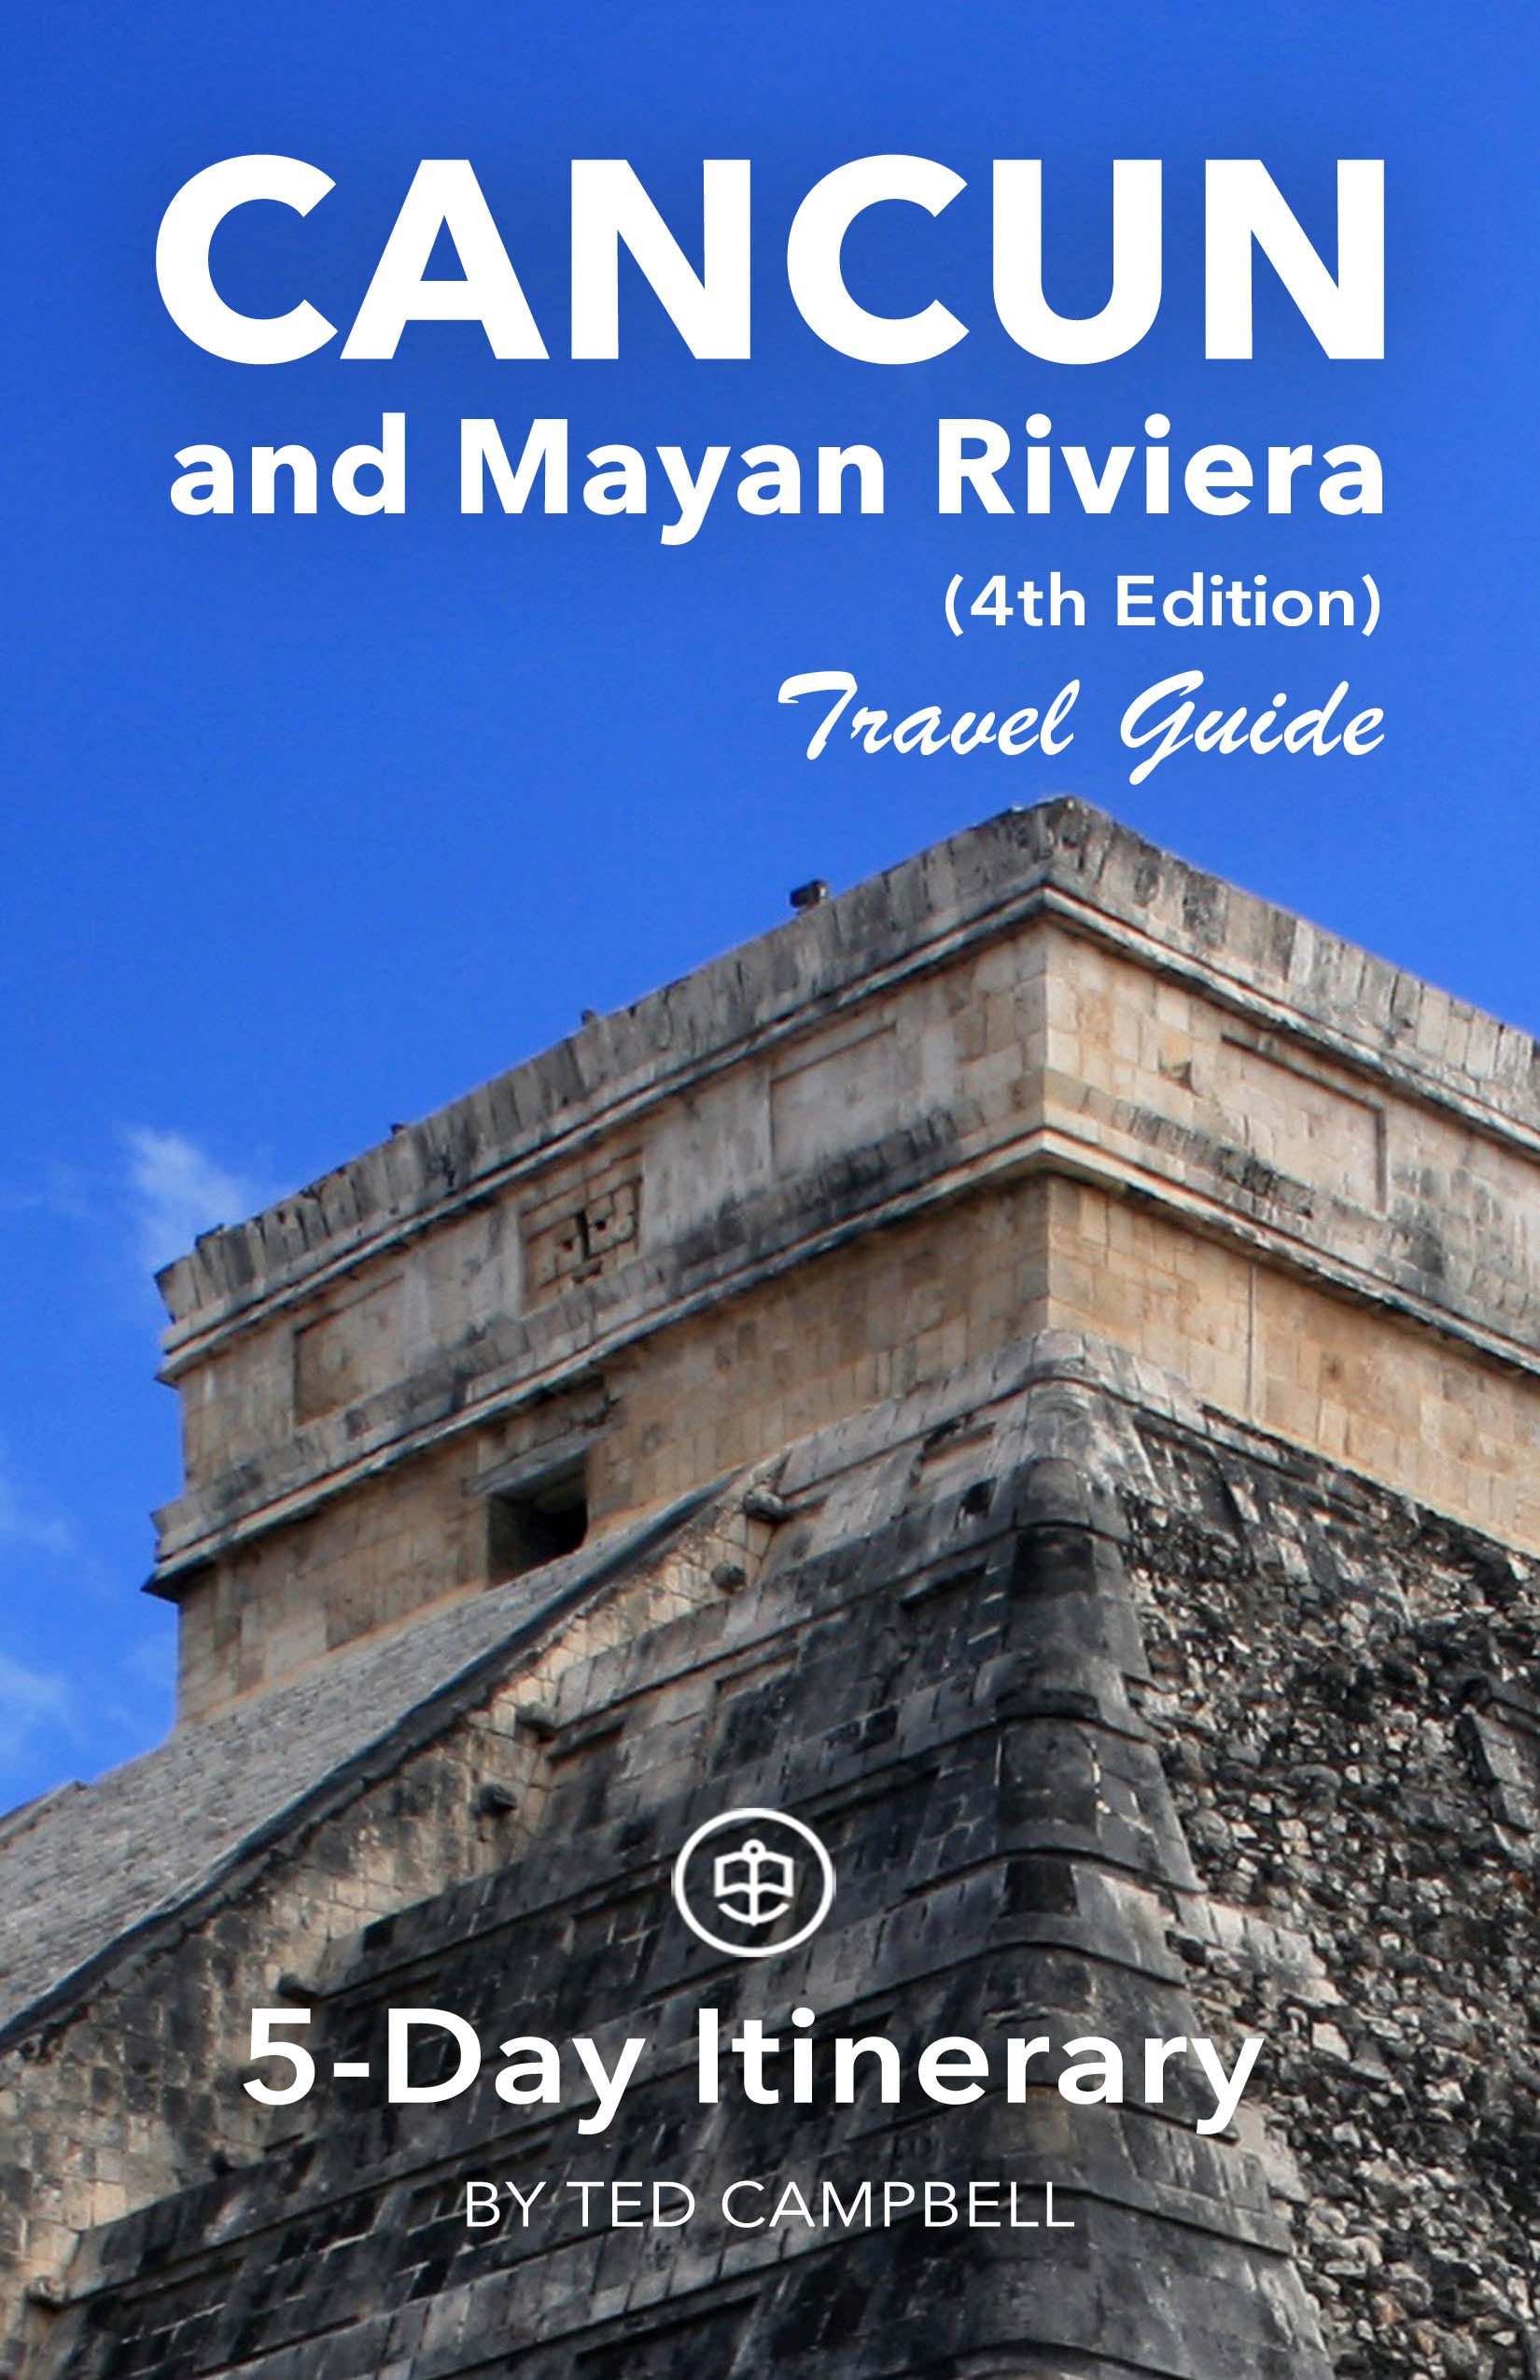 Cancun and Mayan Riviera 5-Day Itinerary (4th Edition)